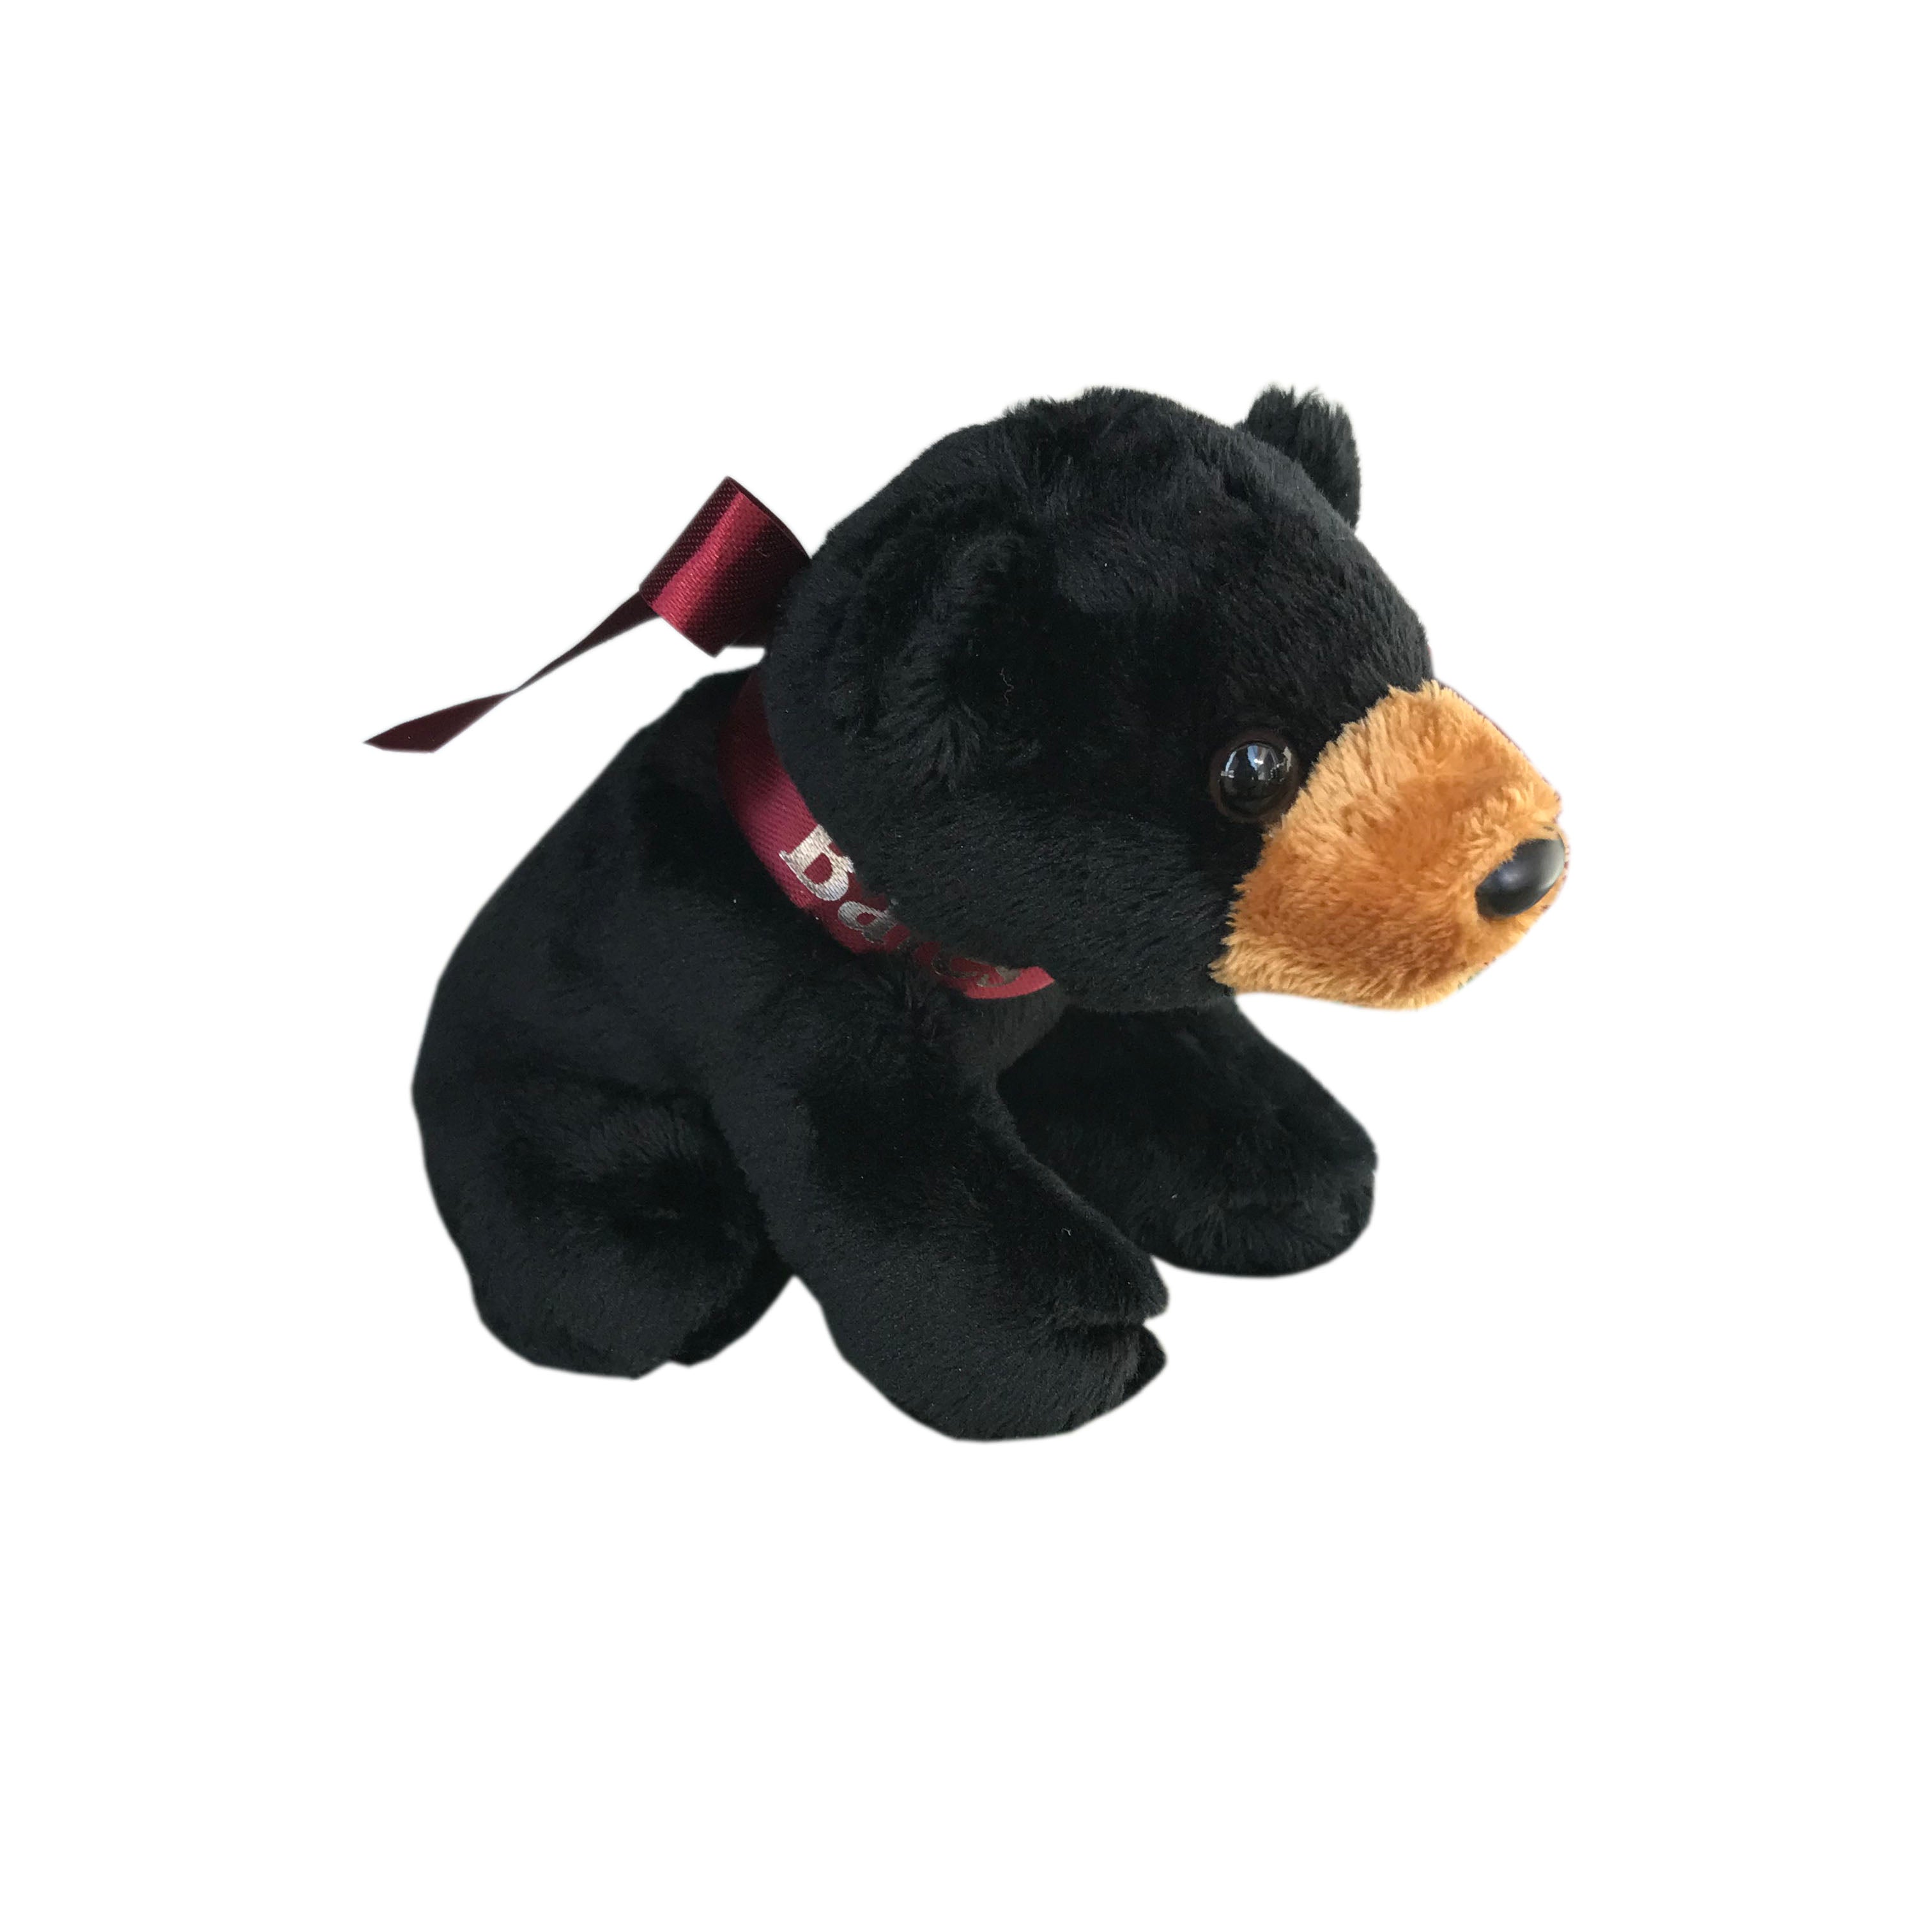 small black bear stuffed animal